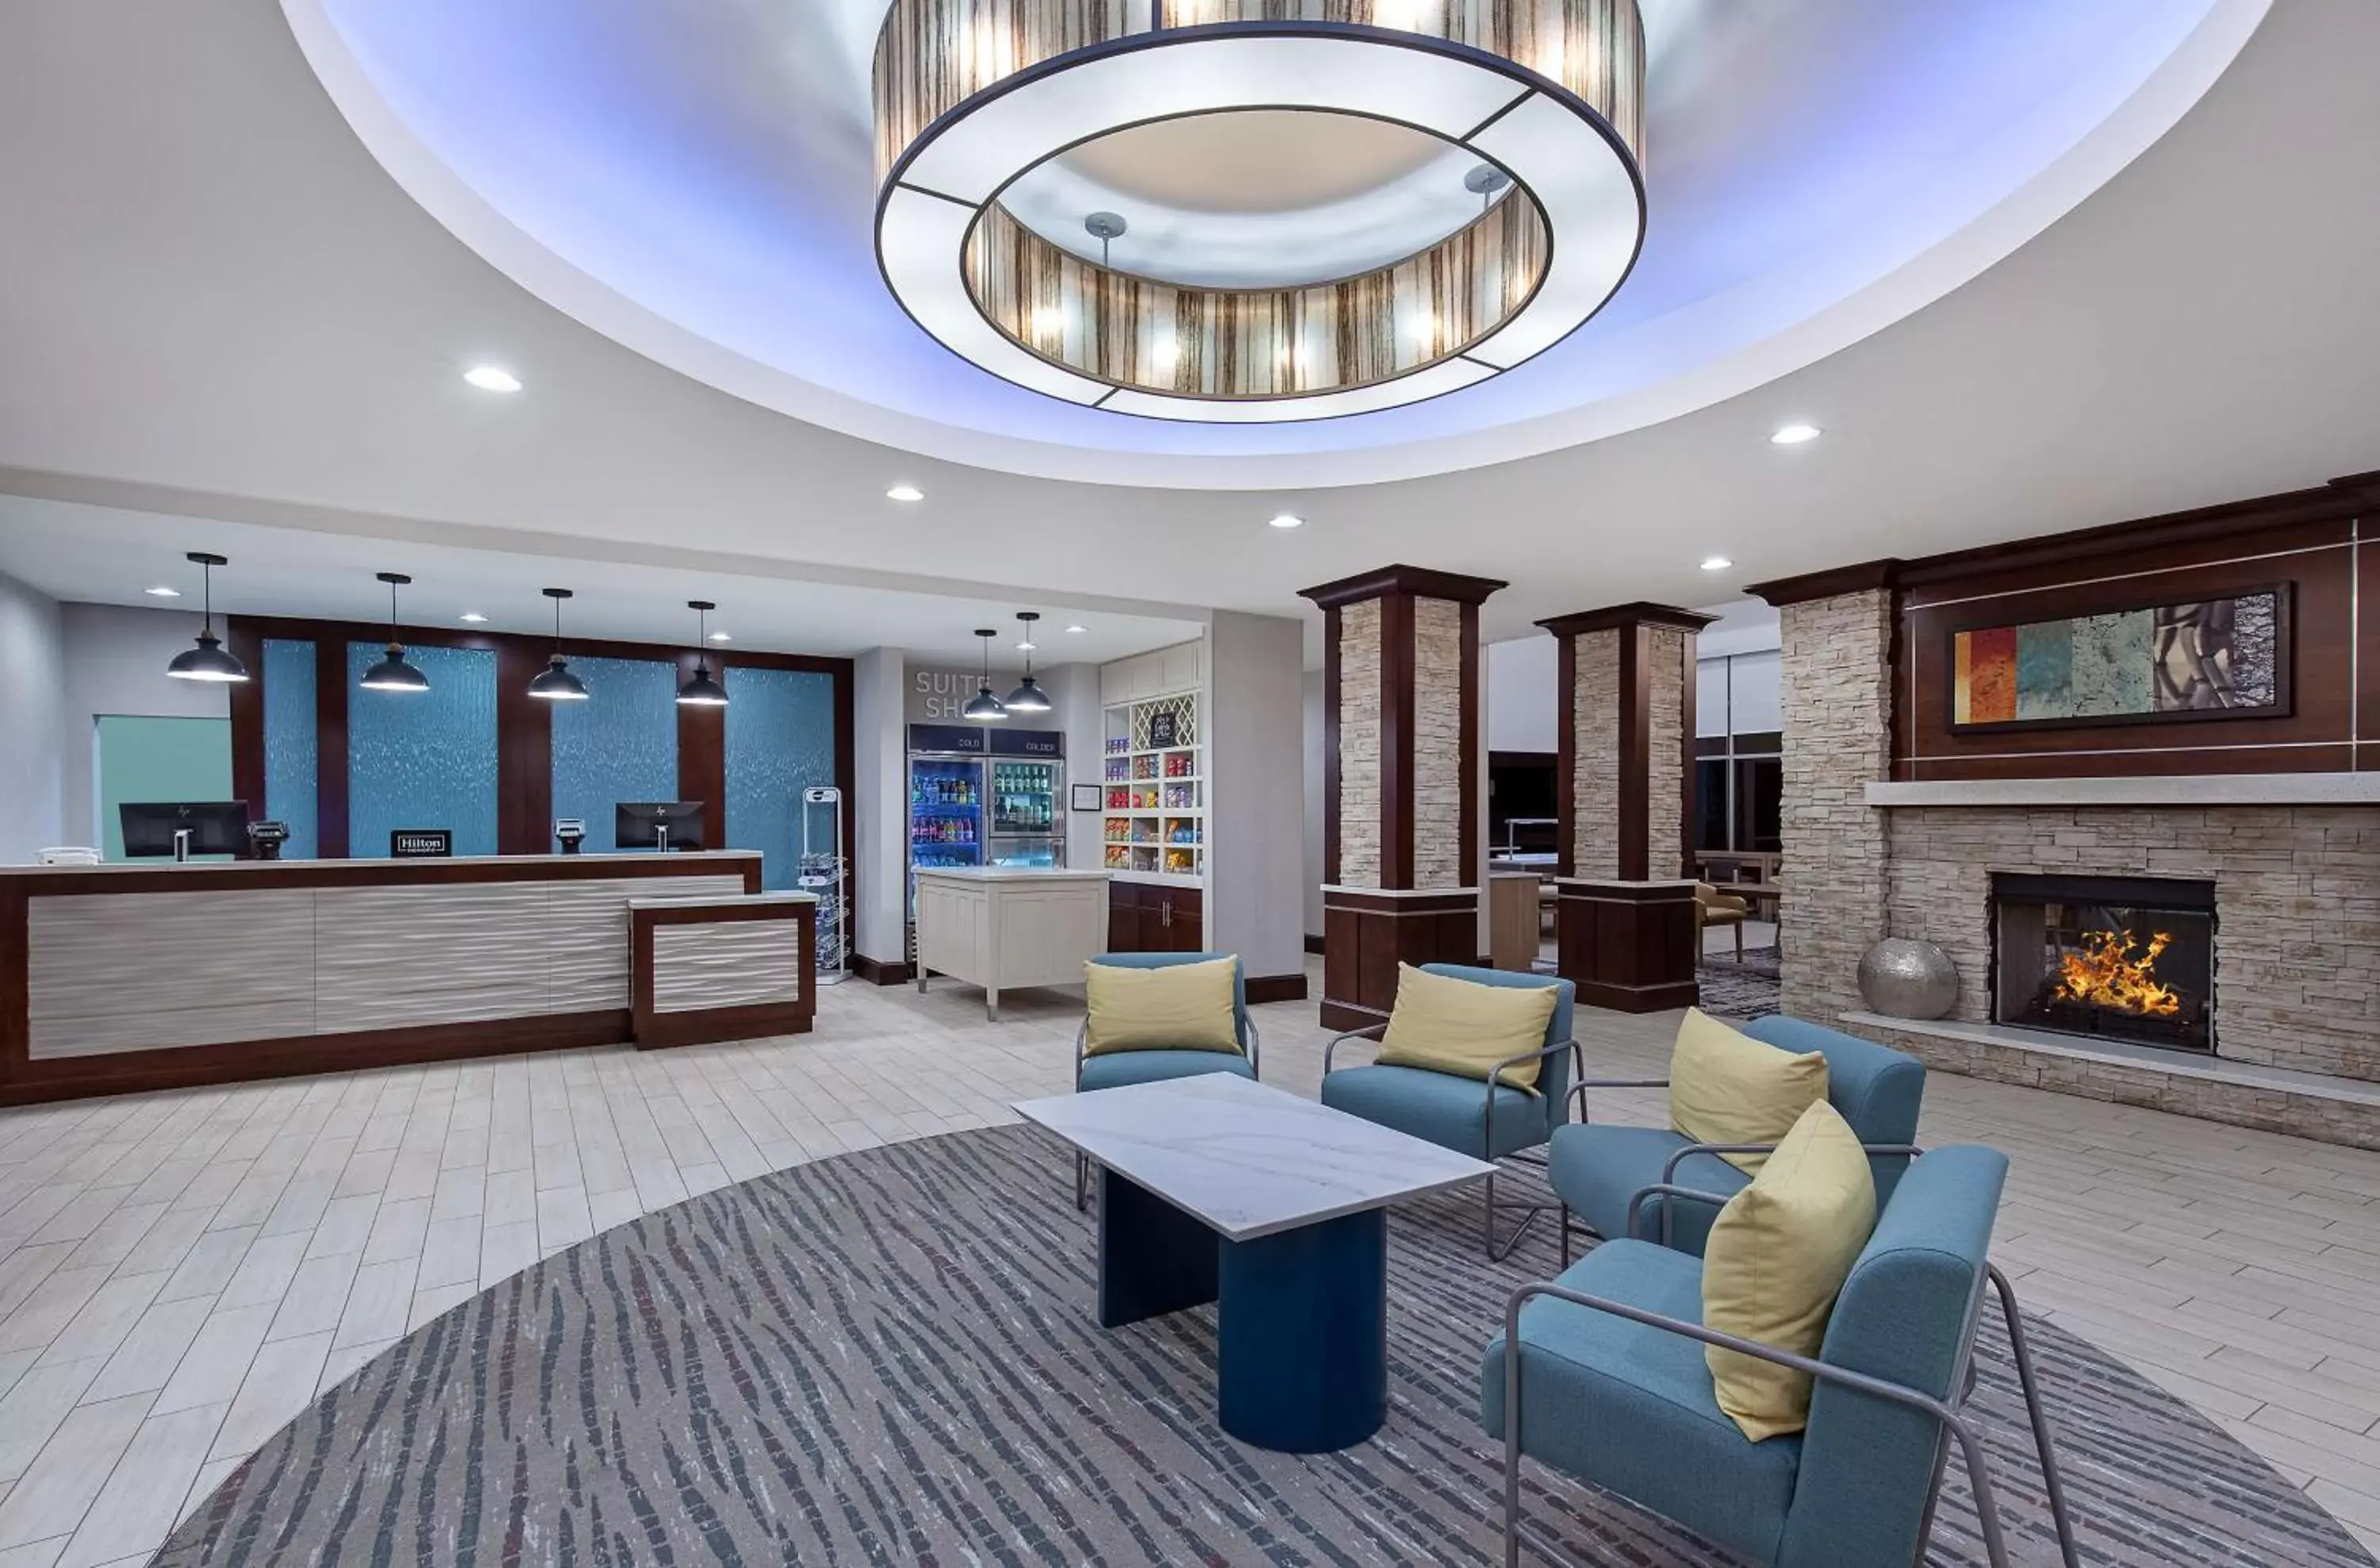 Lobby or reception in Homewood Suites Atlanta/Perimeter Center